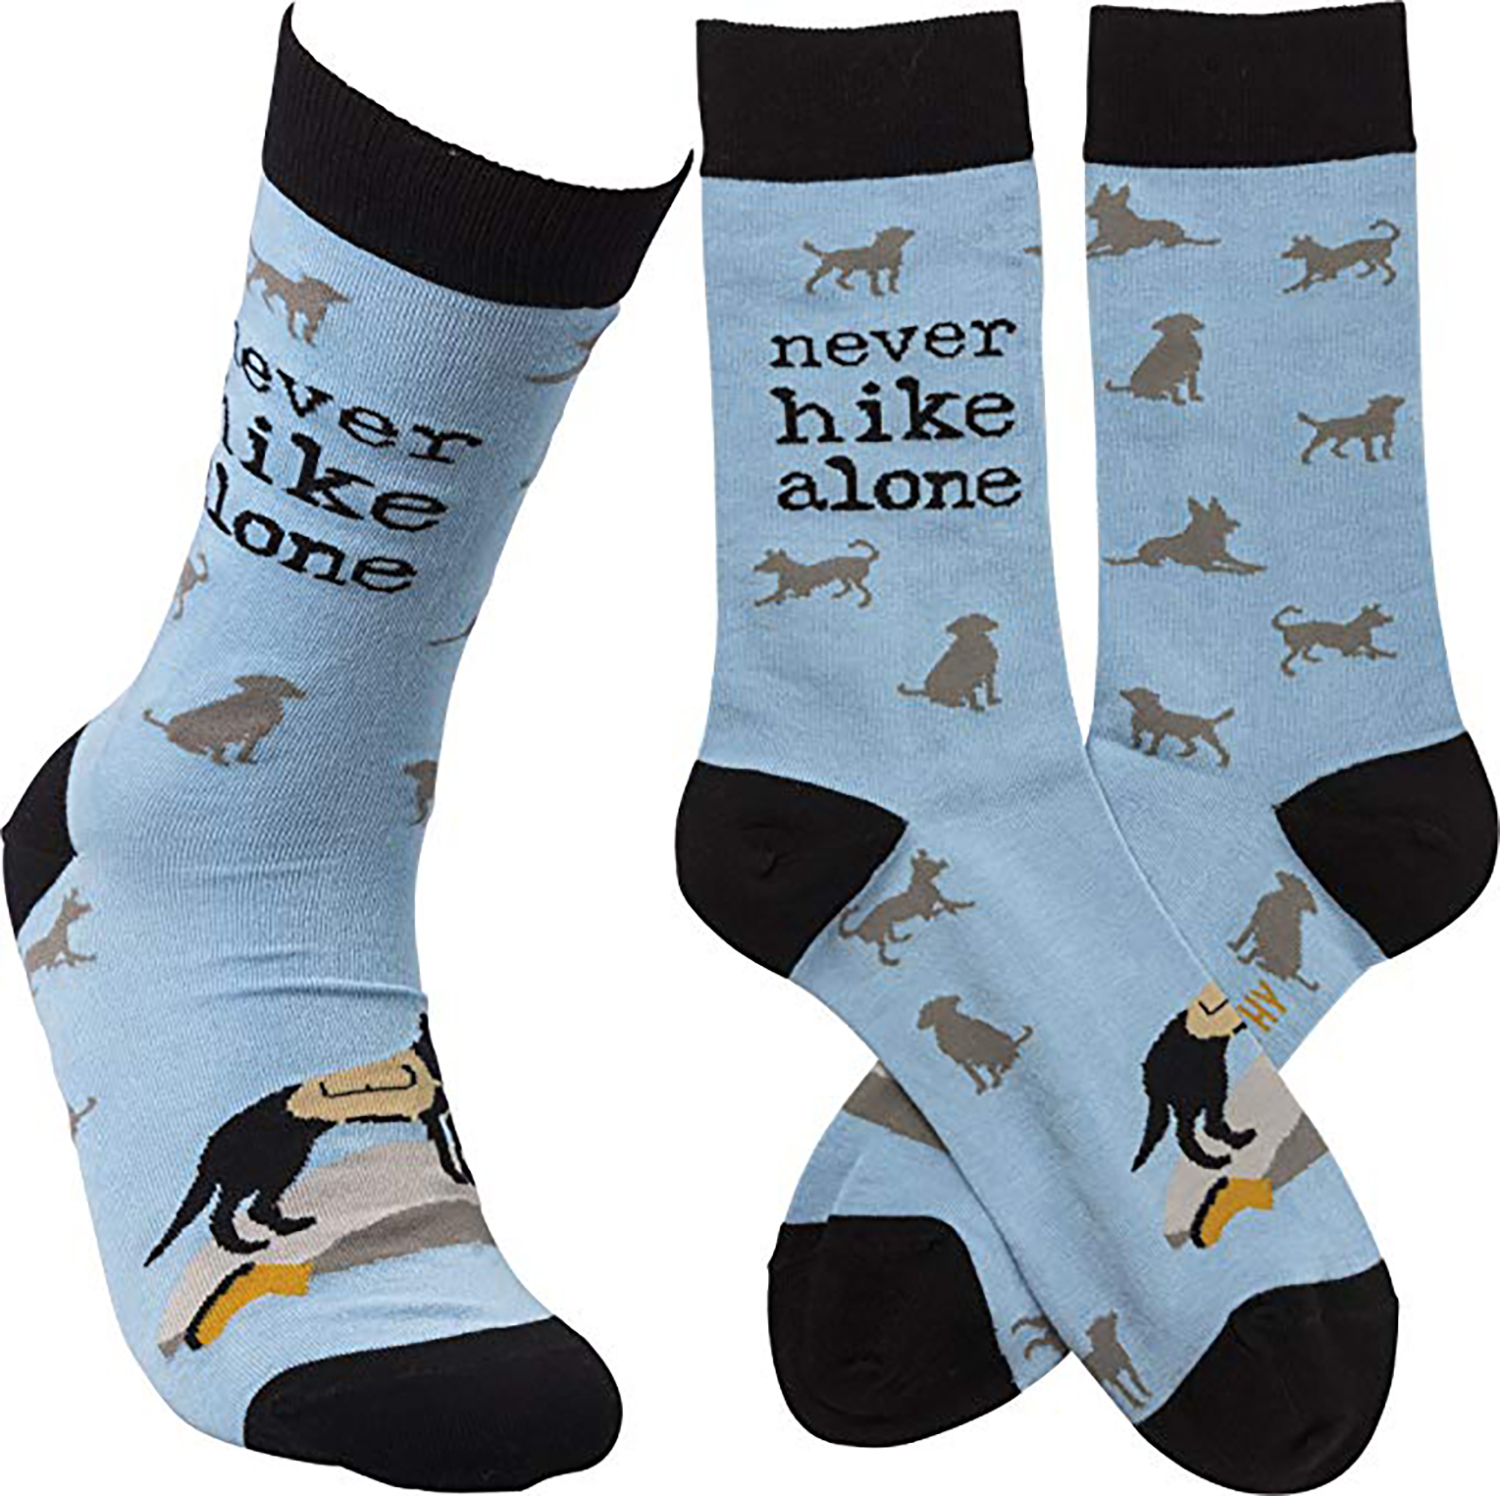 Good Dog Socks (Never Hike Alone) - image 1 of 2